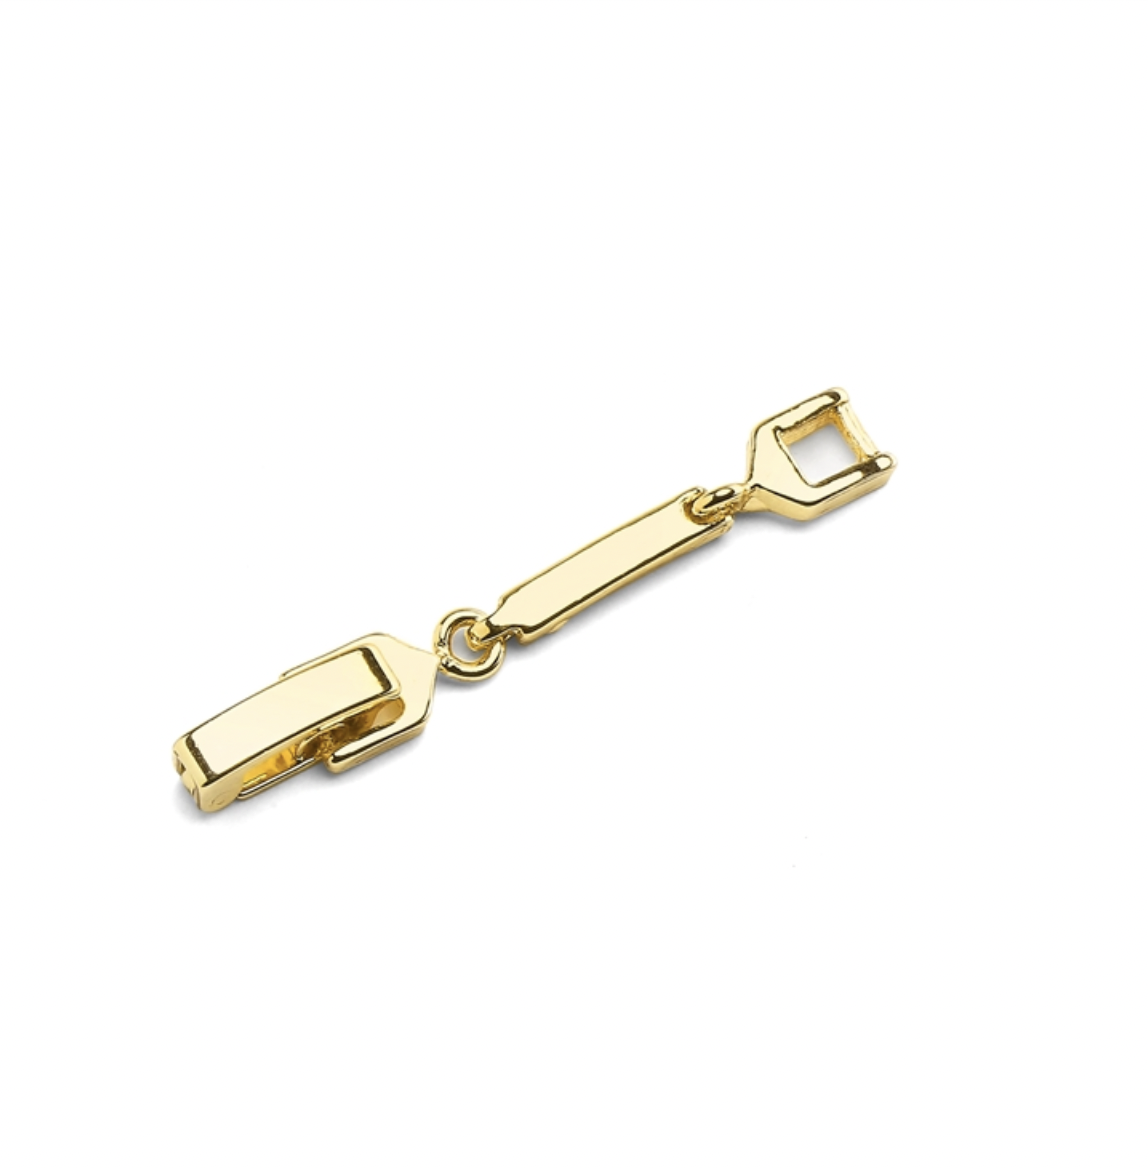 1 1/4" Necklace Extender Foldover Clasp - 14K Gold Plating